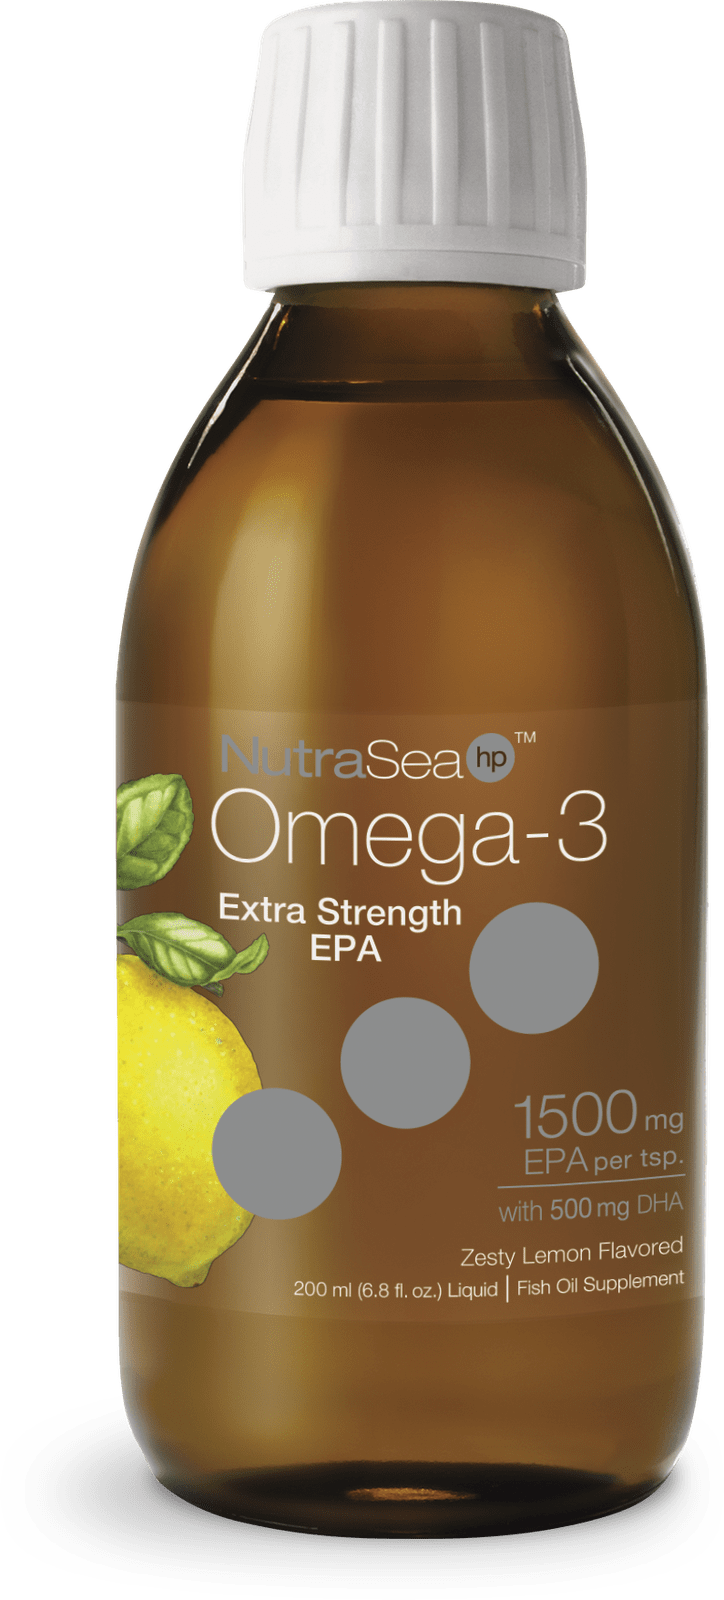 NutraSea HP Omega-3 Extra Strength EPA 1500 mg - Zesty Lemon 200 mL Image 1